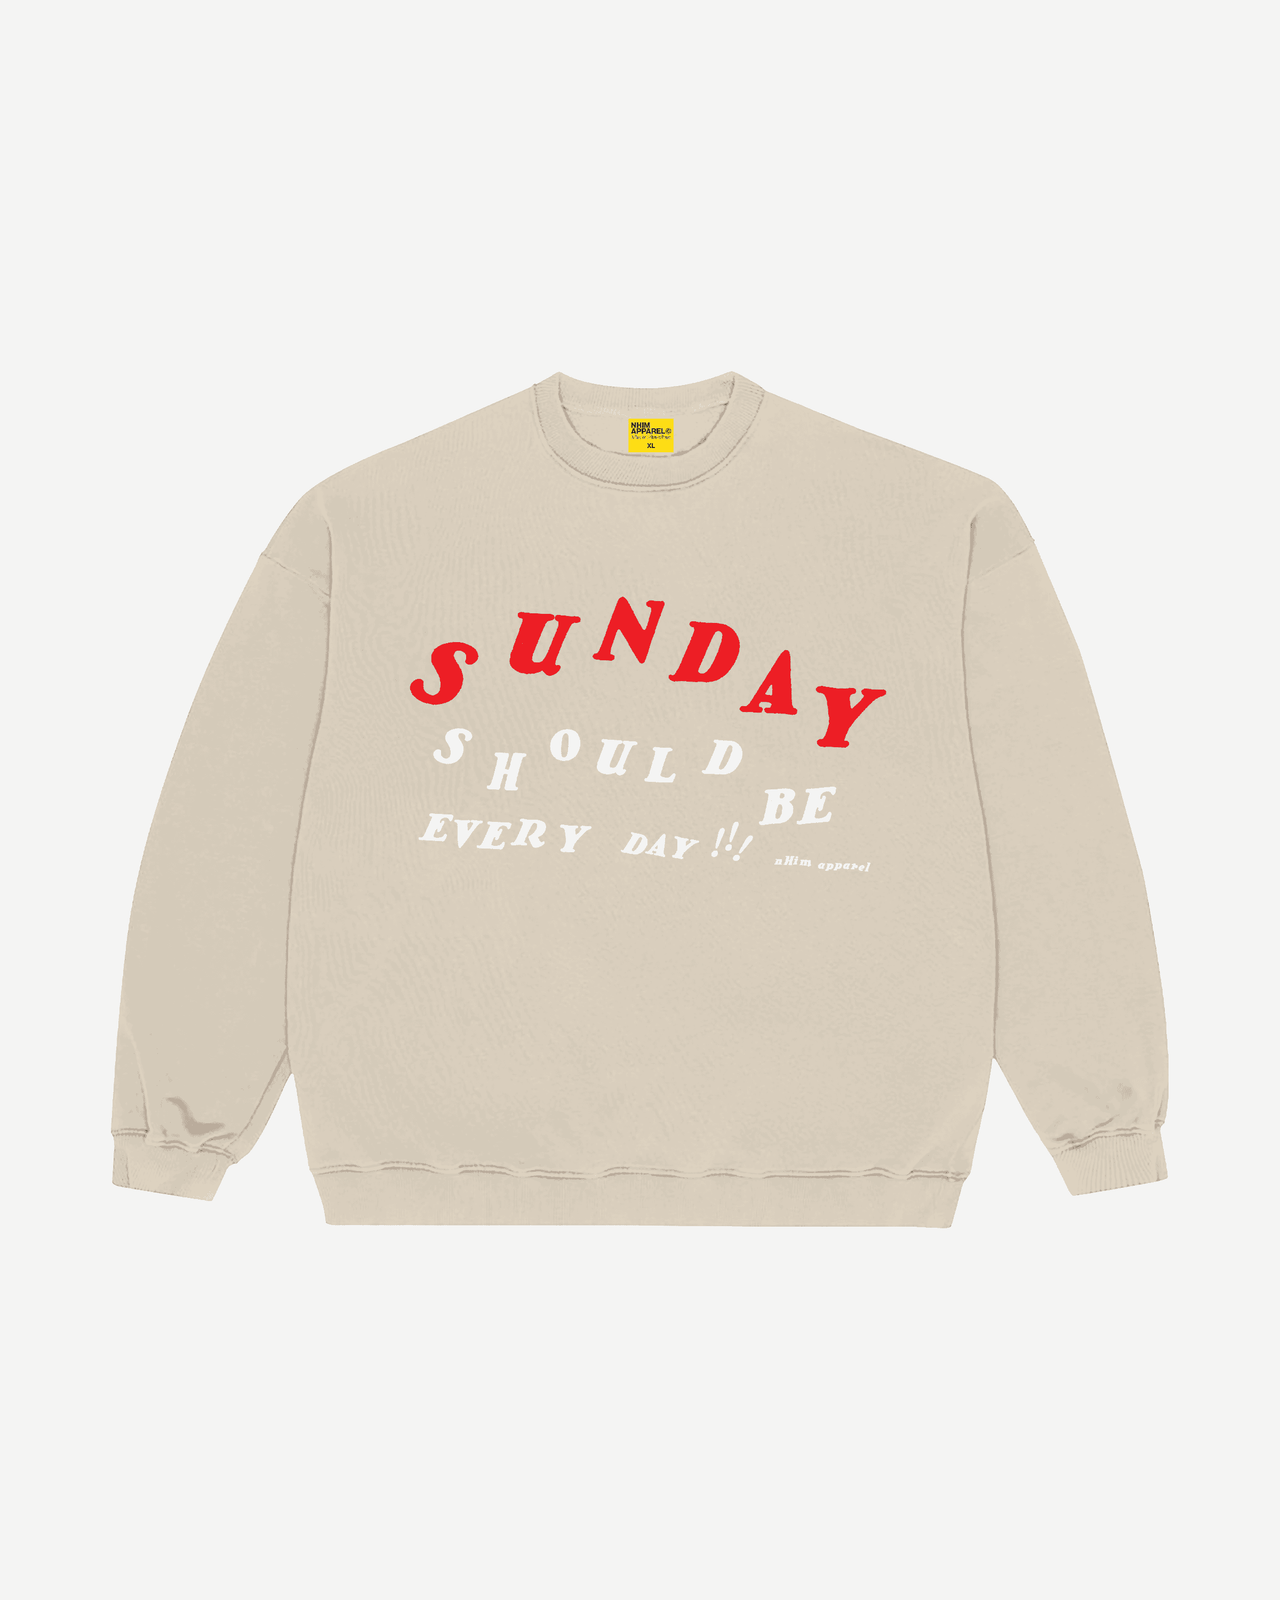 Sand crew sweatshirt Sunday Every Day by NHIM APPAREL Christian clothing brand